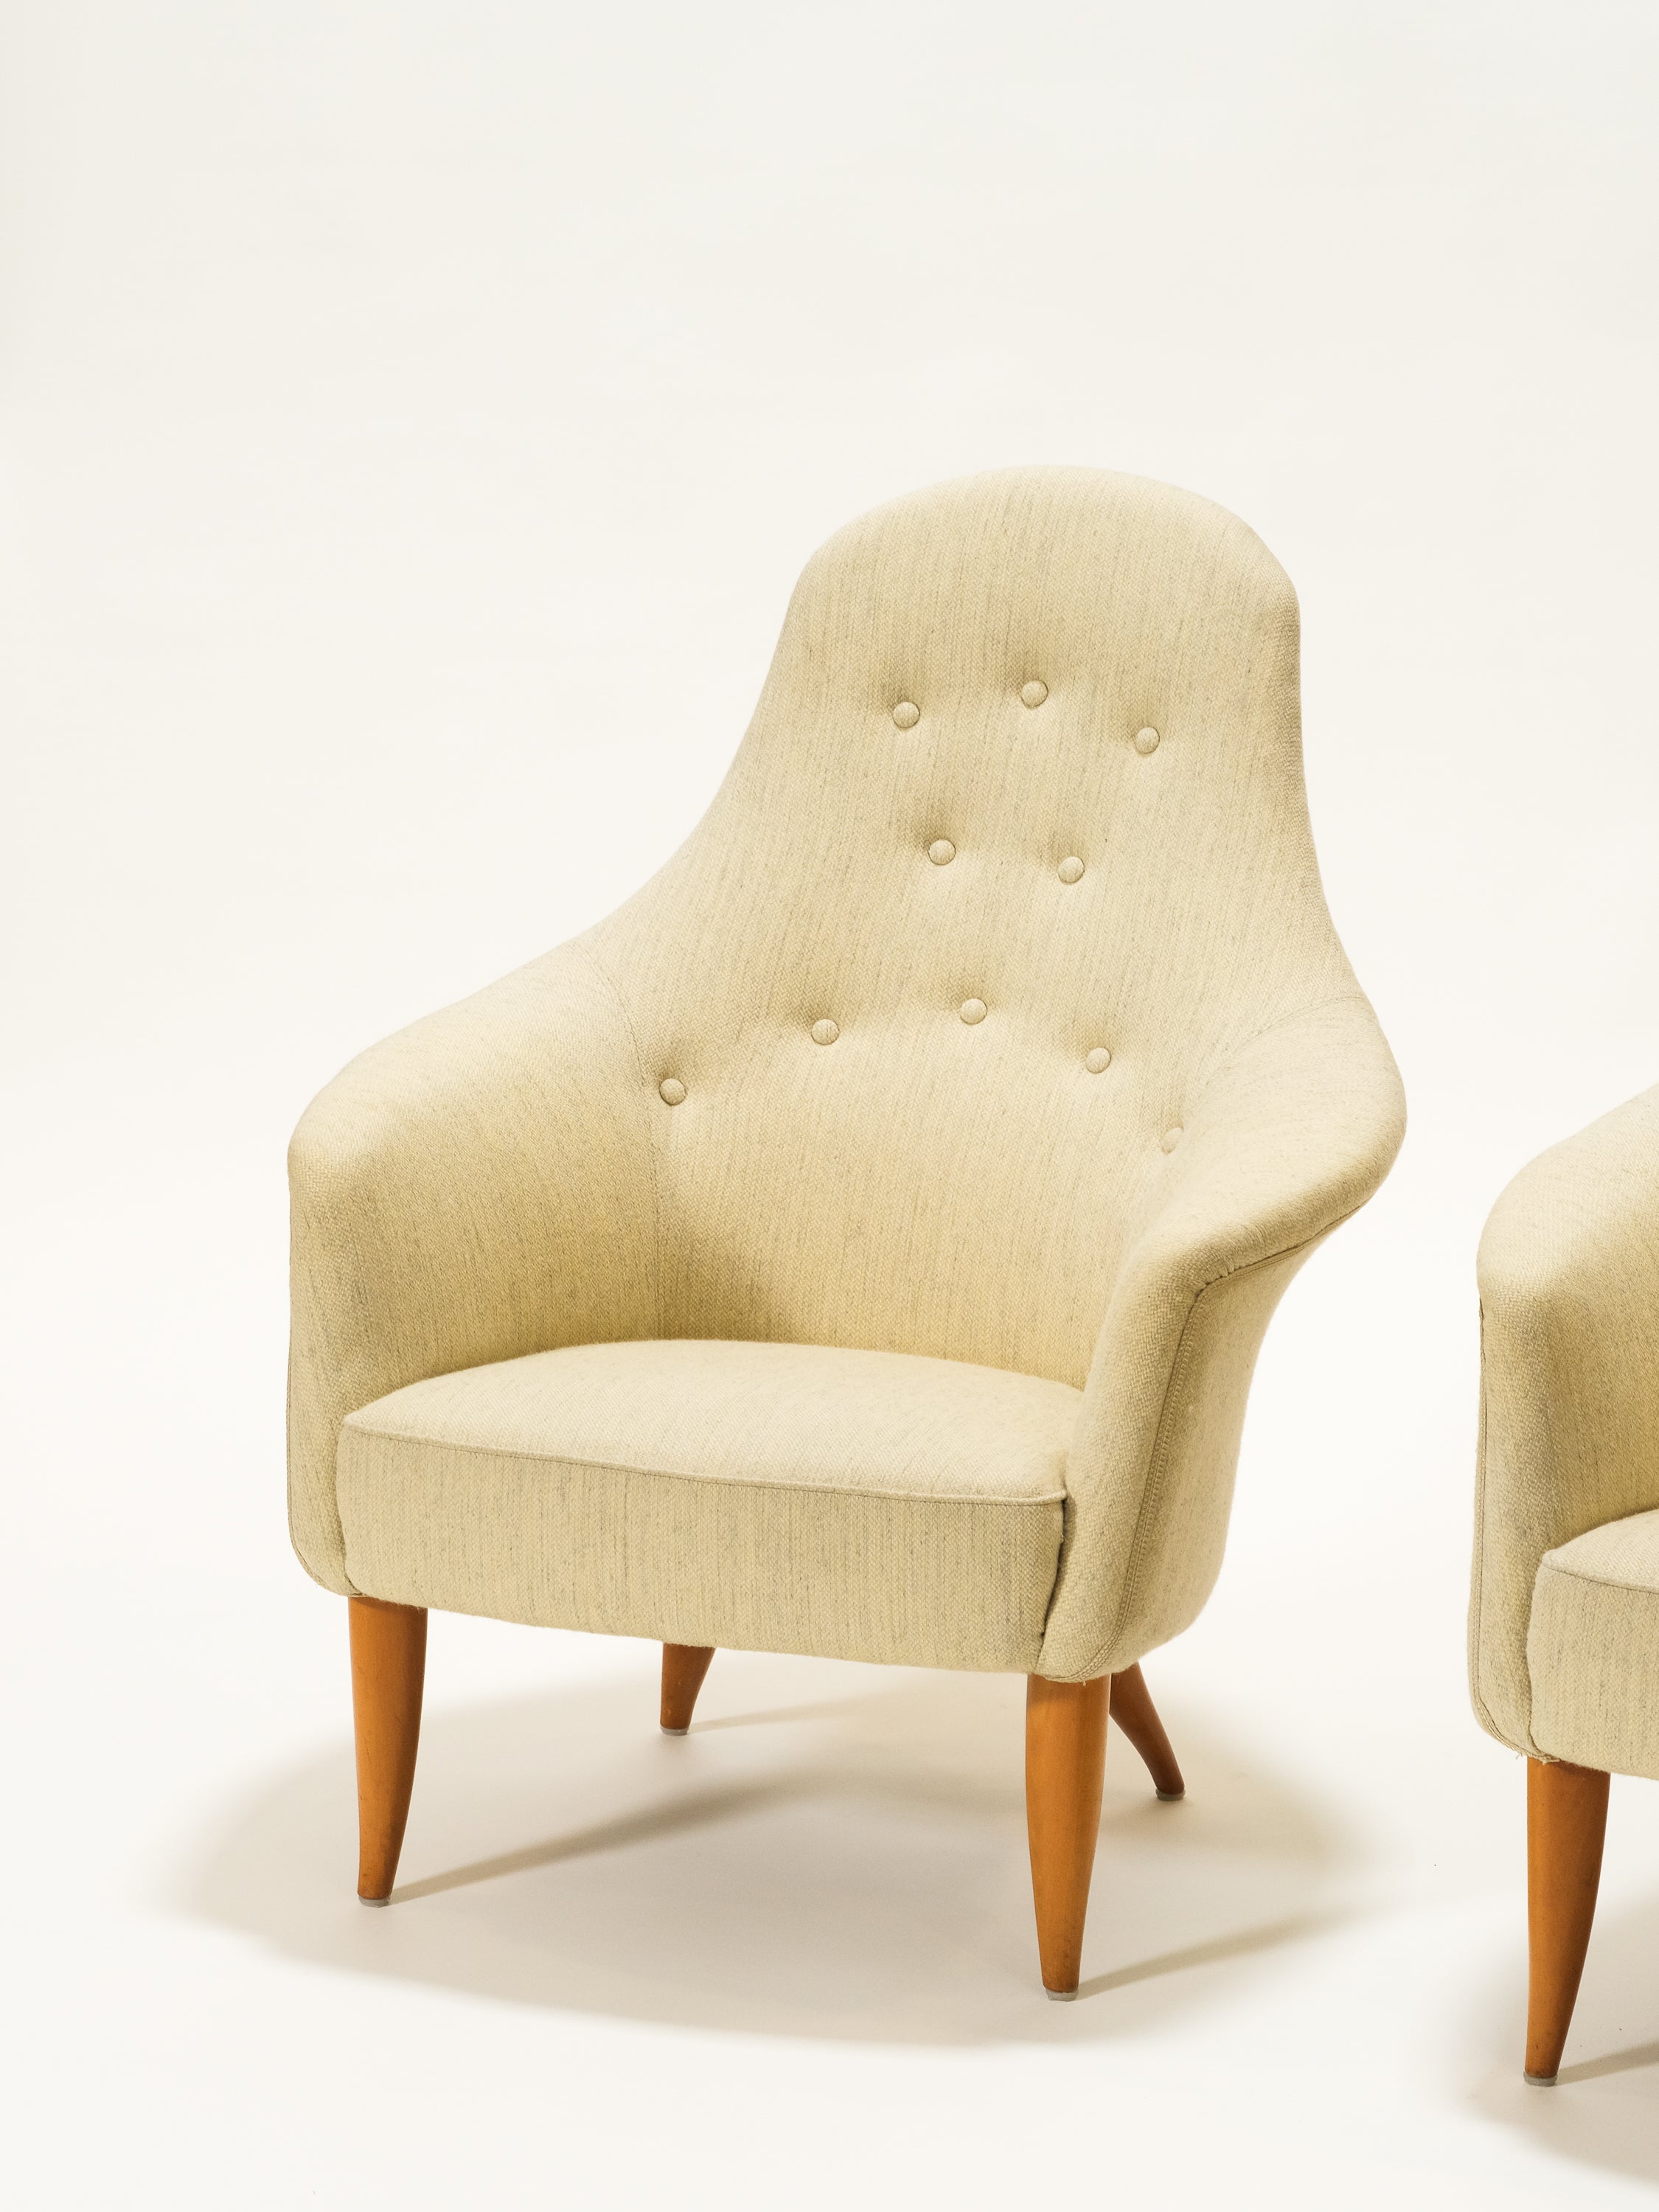 Pair of "Stora Adam" Easy Chairs by Kerstin Hörlin-Holmquist for Nordiska Kompaniet, Sweden, 1950s